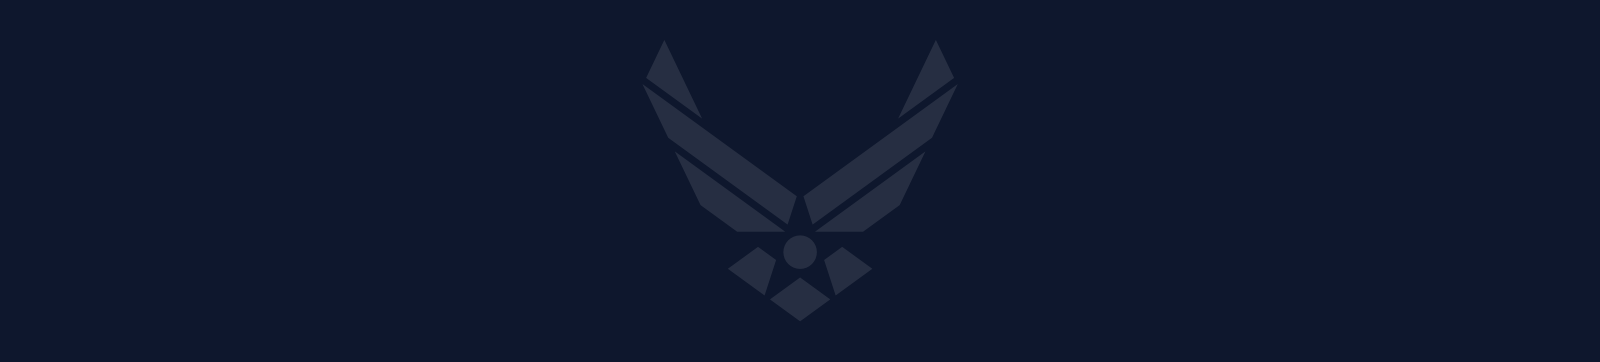 US Air Force Logos Wallpapers - Wallpaper Cave